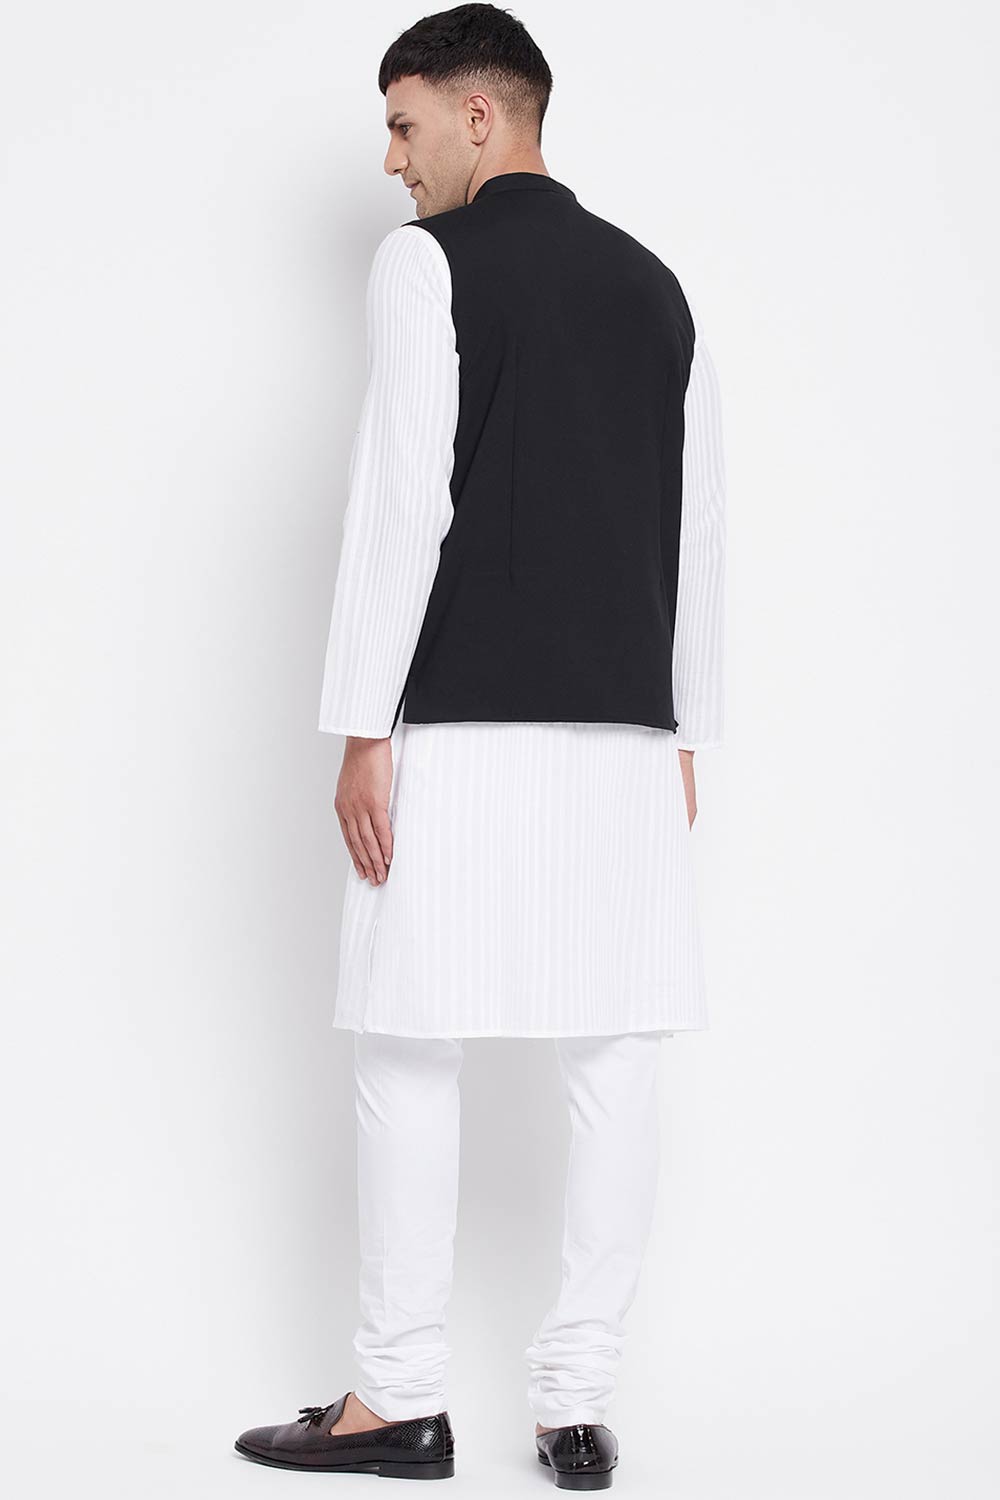 Buy Men's Merino Eid Mubarak Embroidery Nehru Jacket in Black - Zoom in